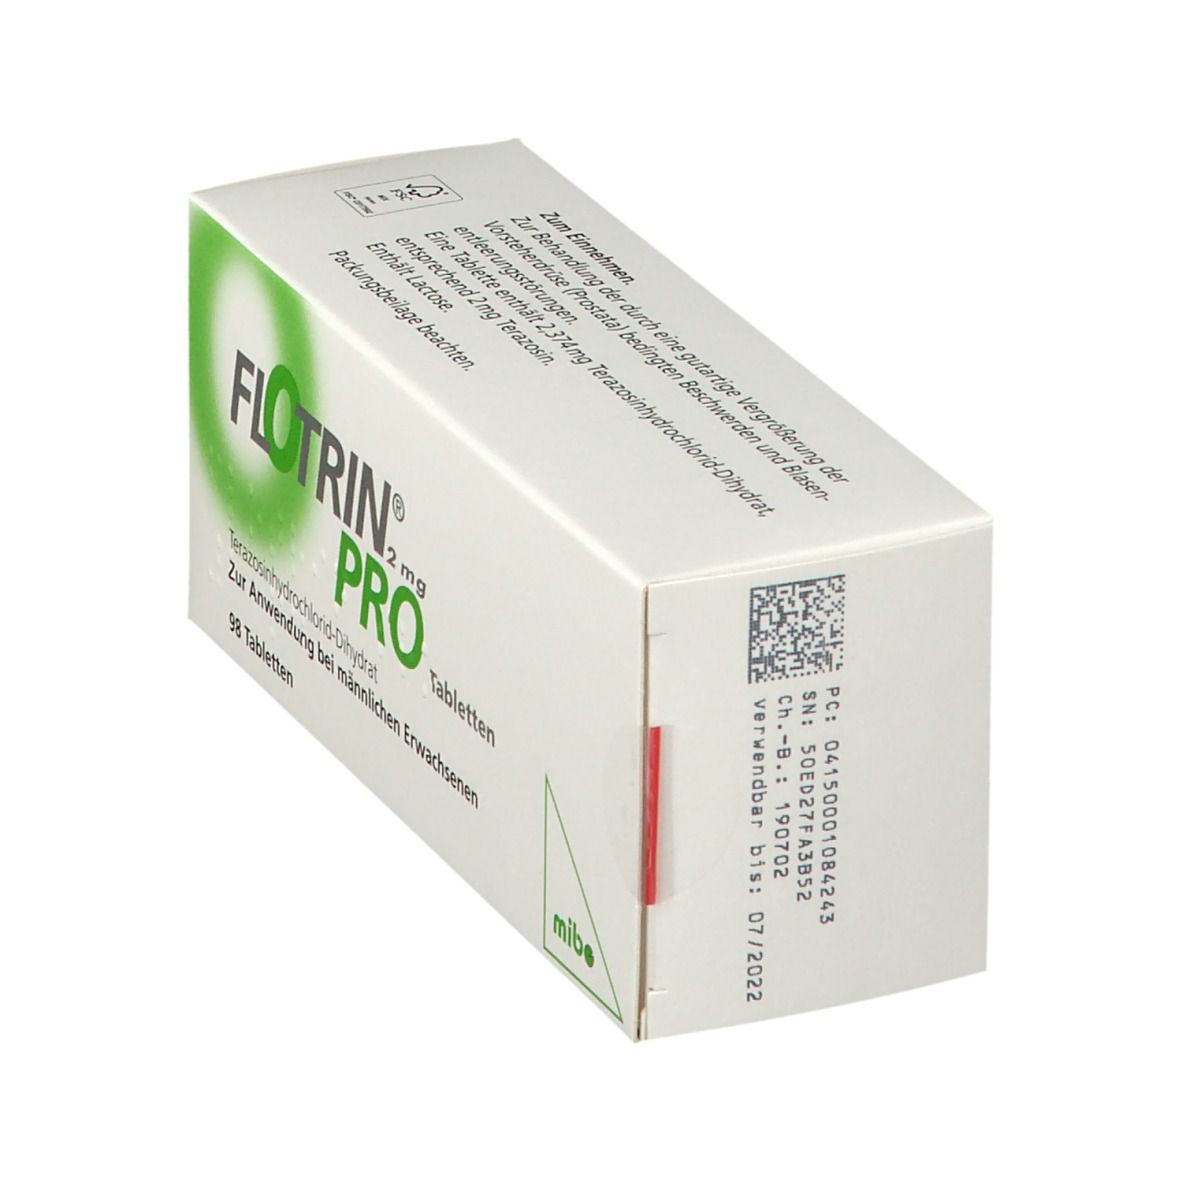 Flotrin 2 mg Pro